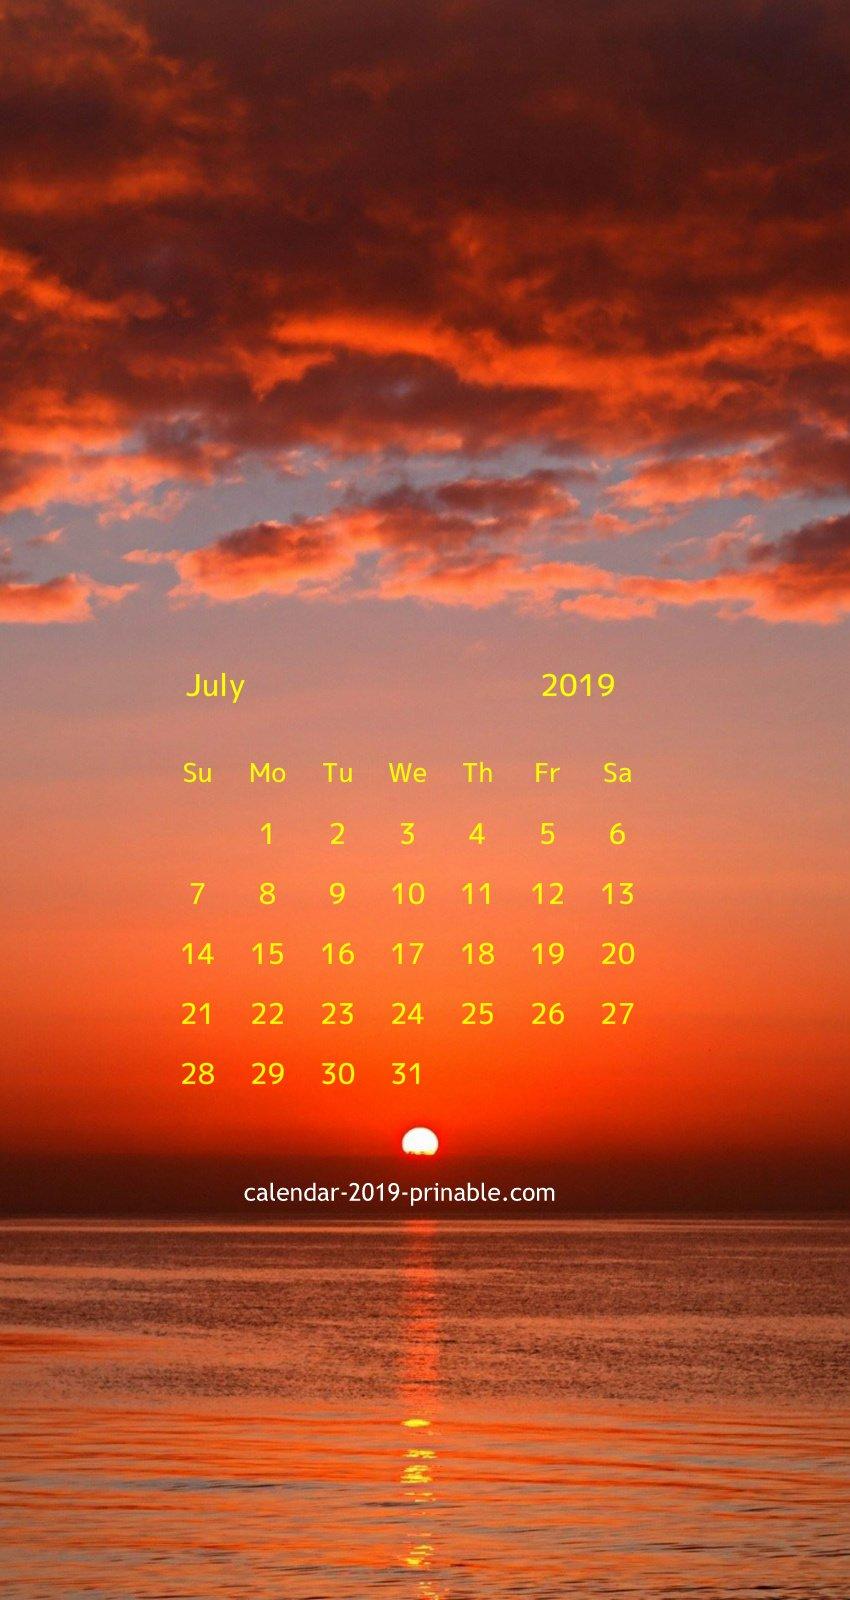 July 2019 iPhone Calendar Wallpaper. Calendar 2019 Printable